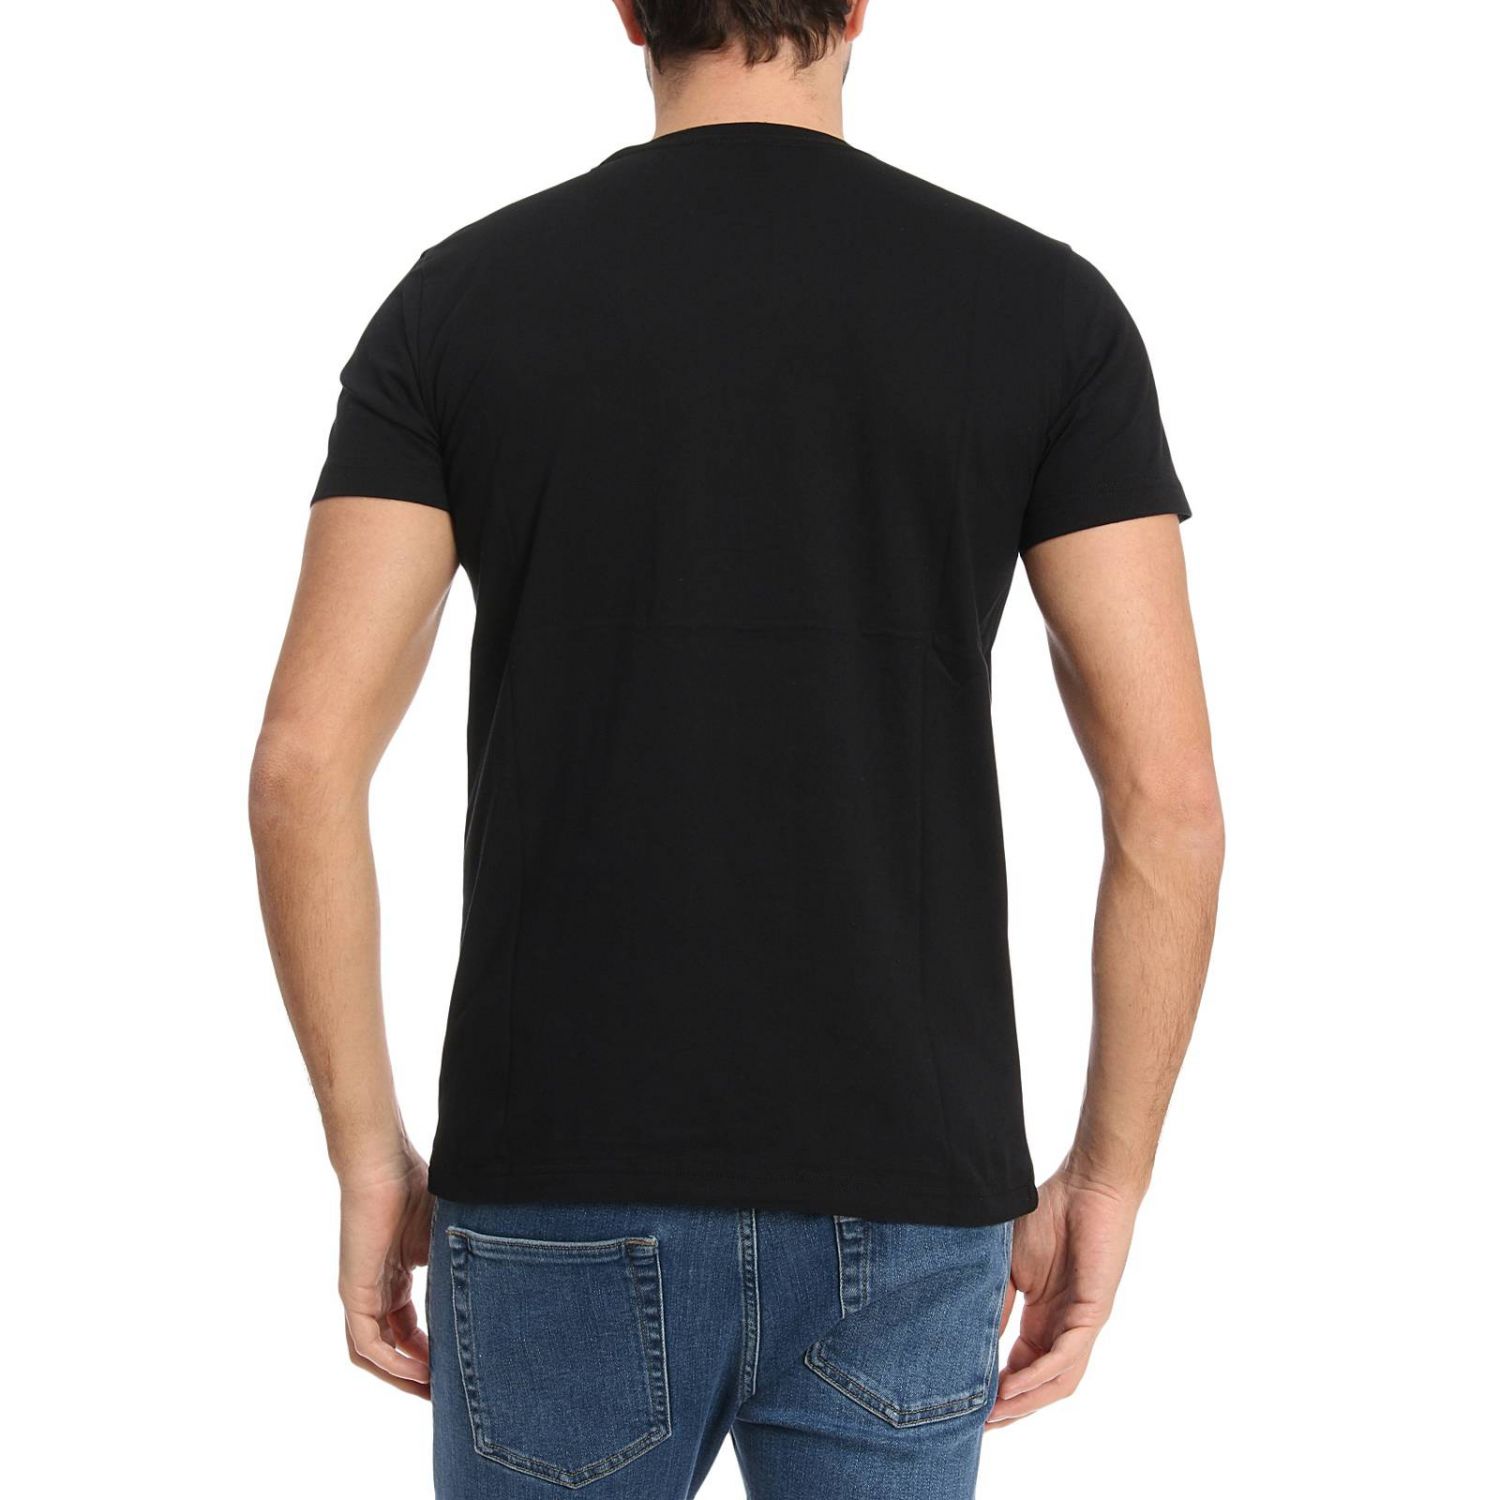 Diesel Outlet: T-shirt men | T-Shirt Diesel Men Black | T-Shirt Diesel ...